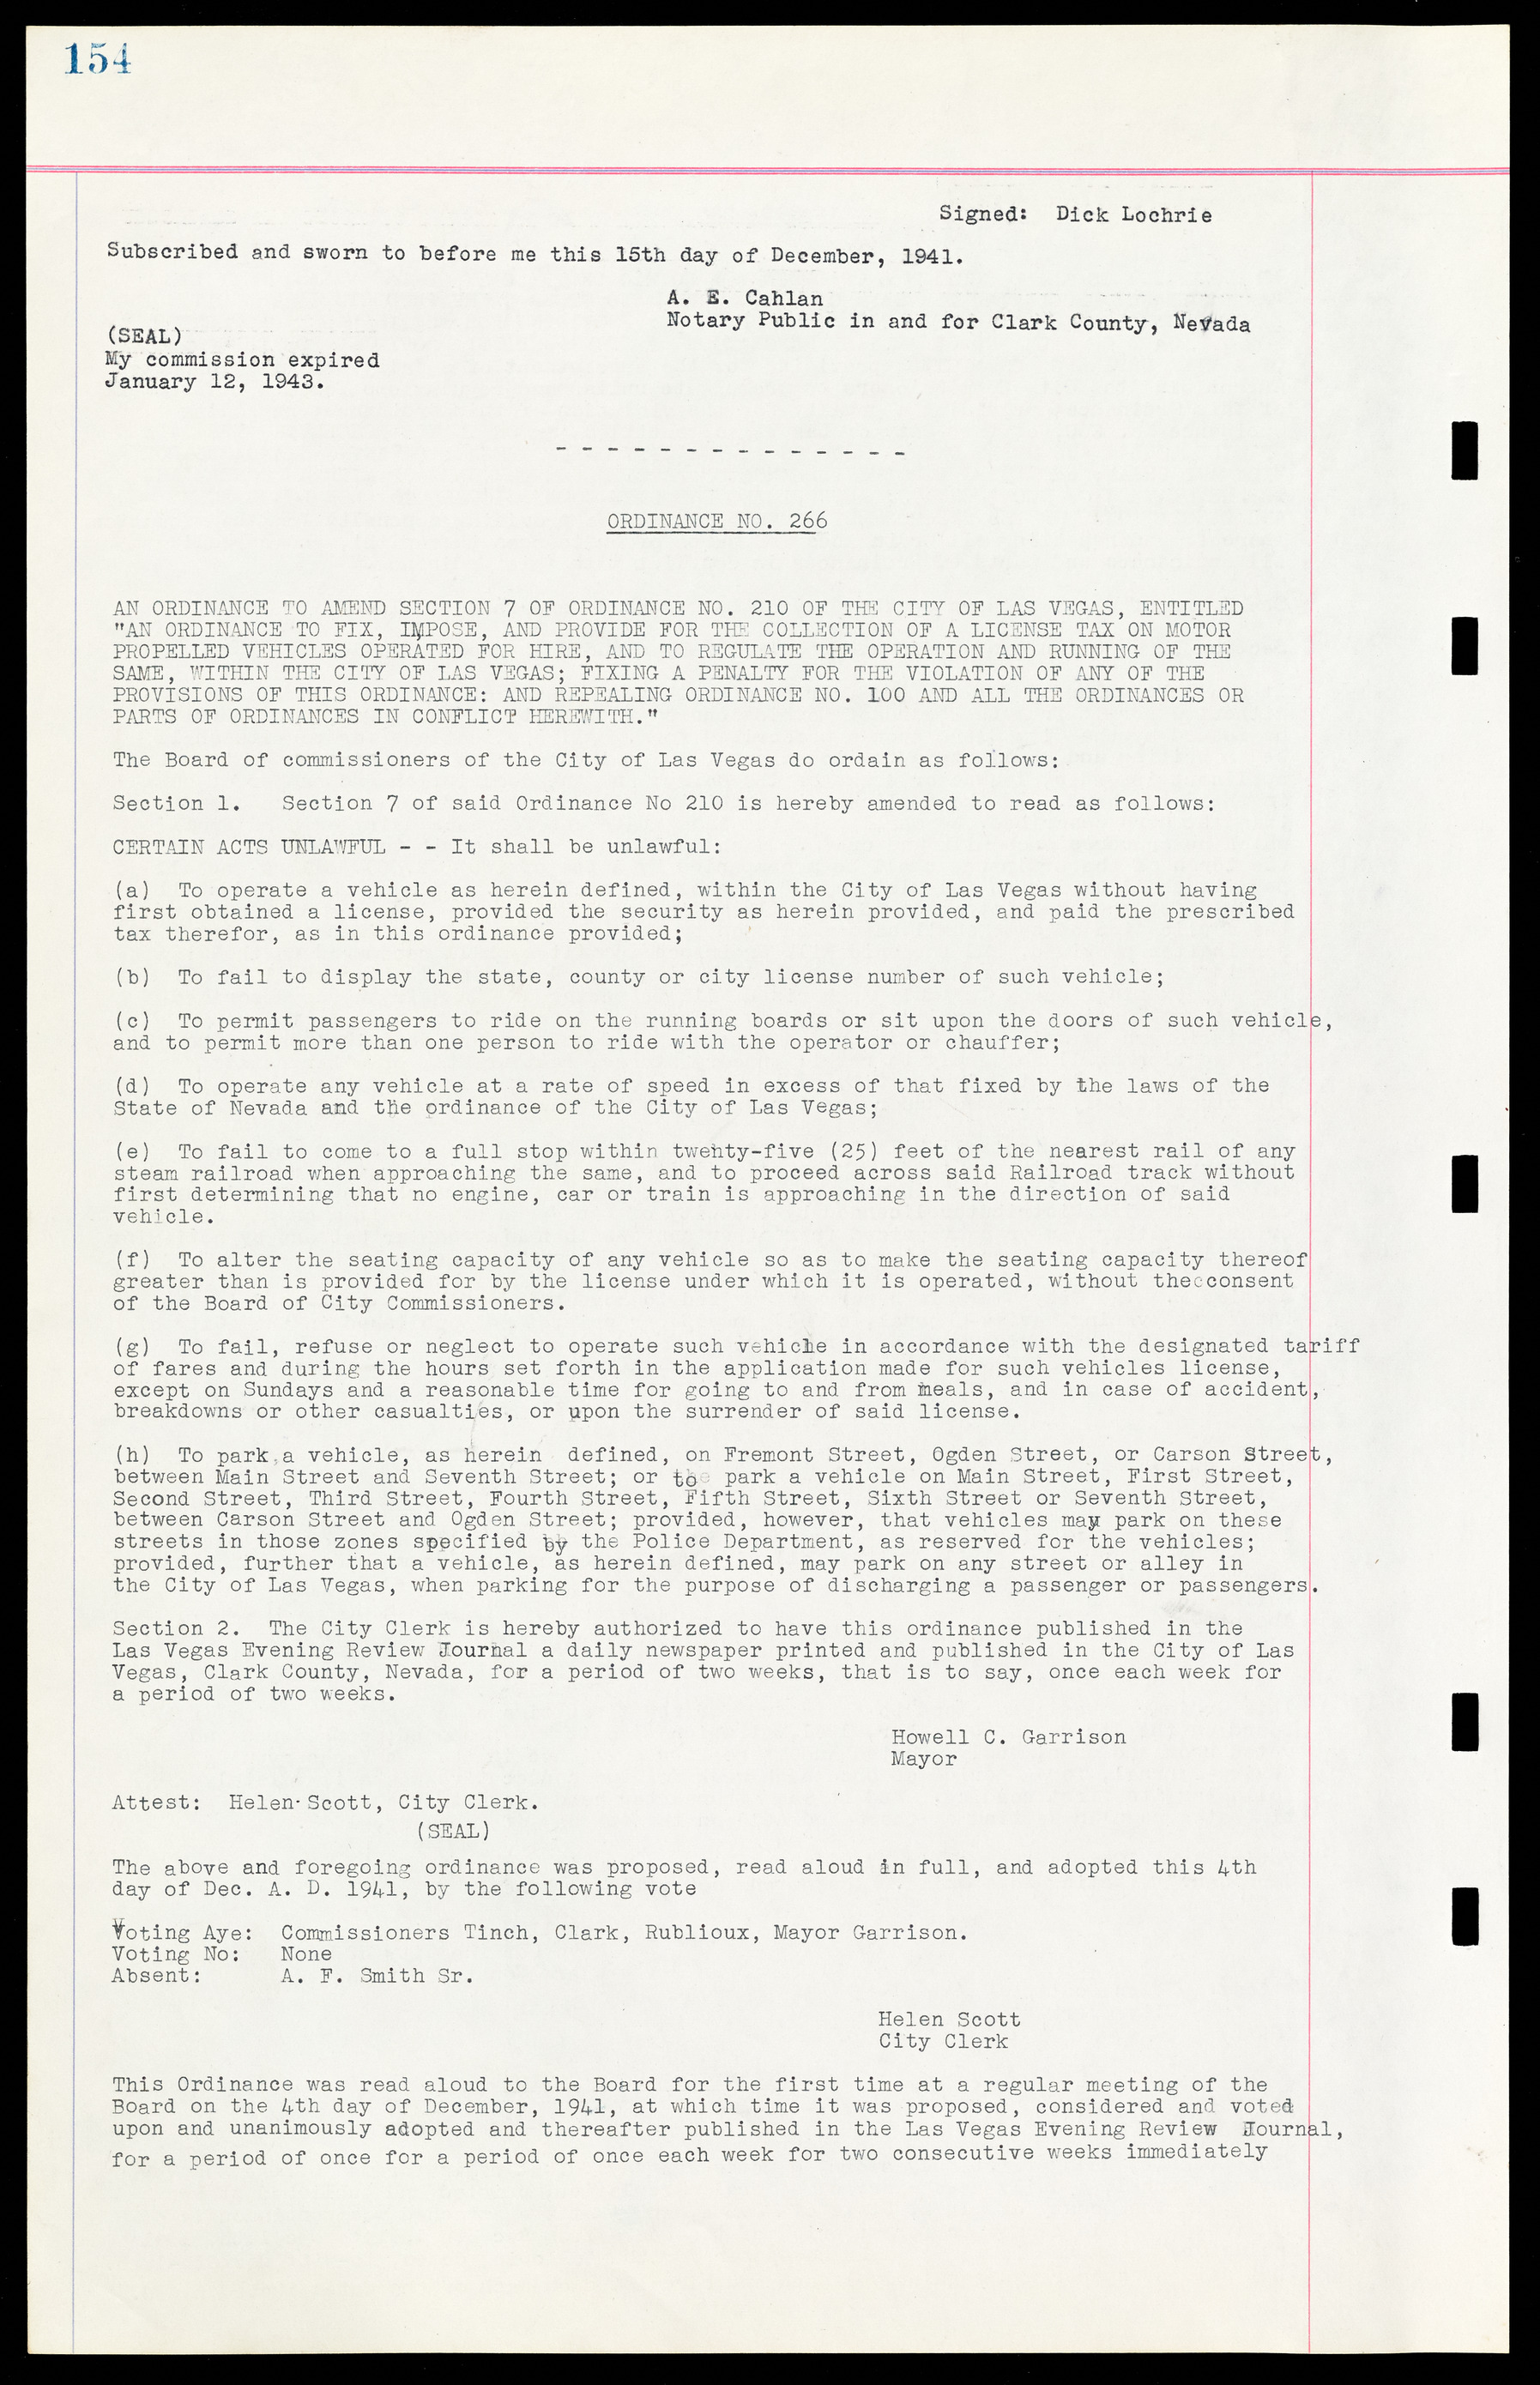 Las Vegas City Ordinances, March 31, 1933 to October 25, 1950, lvc000014-174